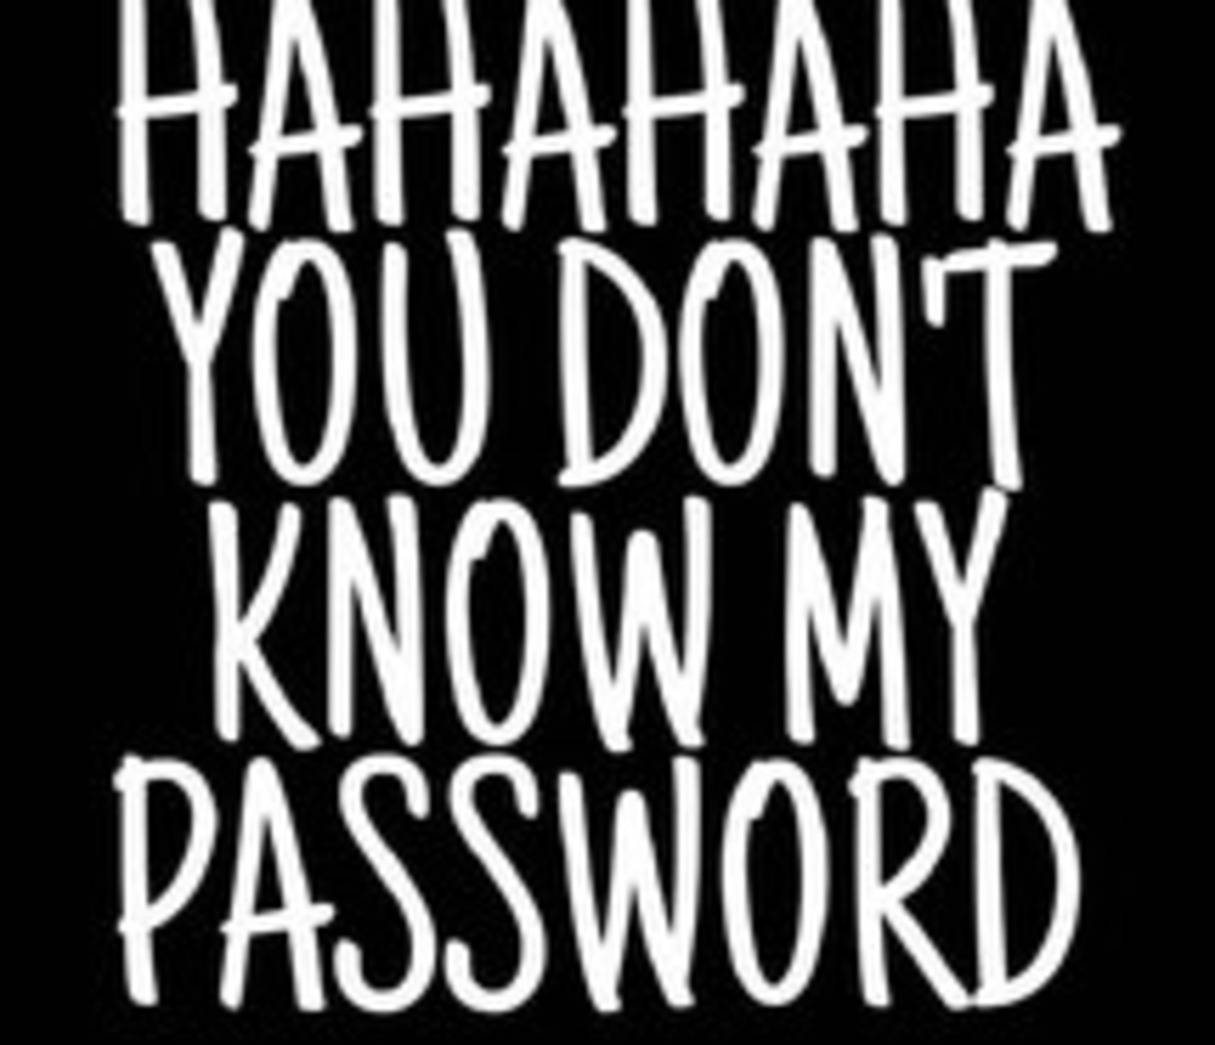 Playful Digital Security - "Hahaha You Don't Know My Password" Wallpaper